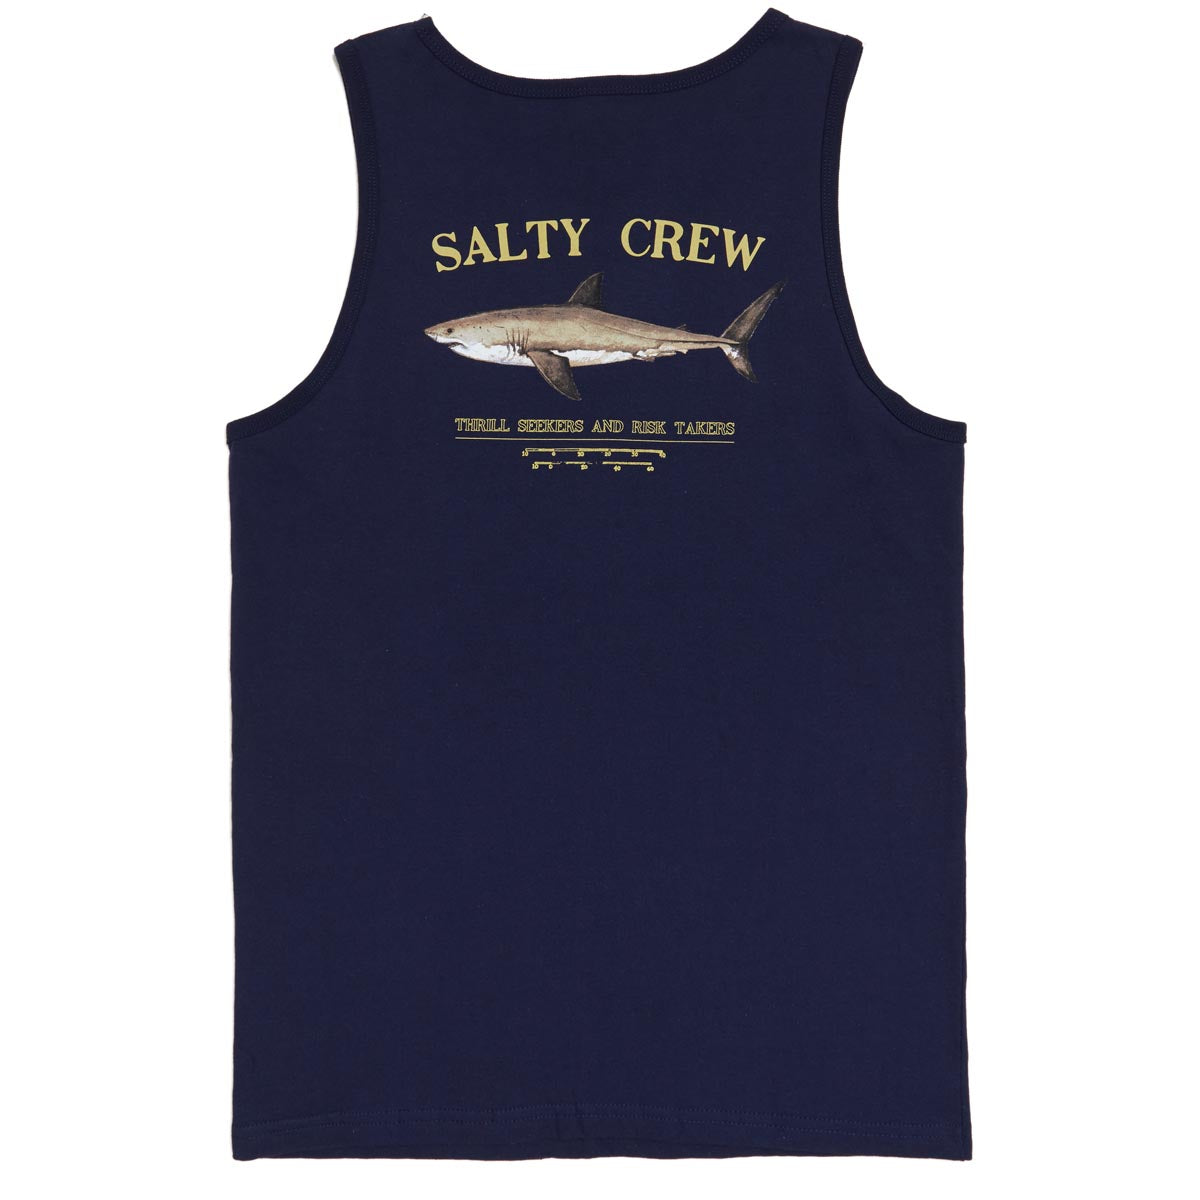 Salty Crew Bruce Tank Top - Navy image 2